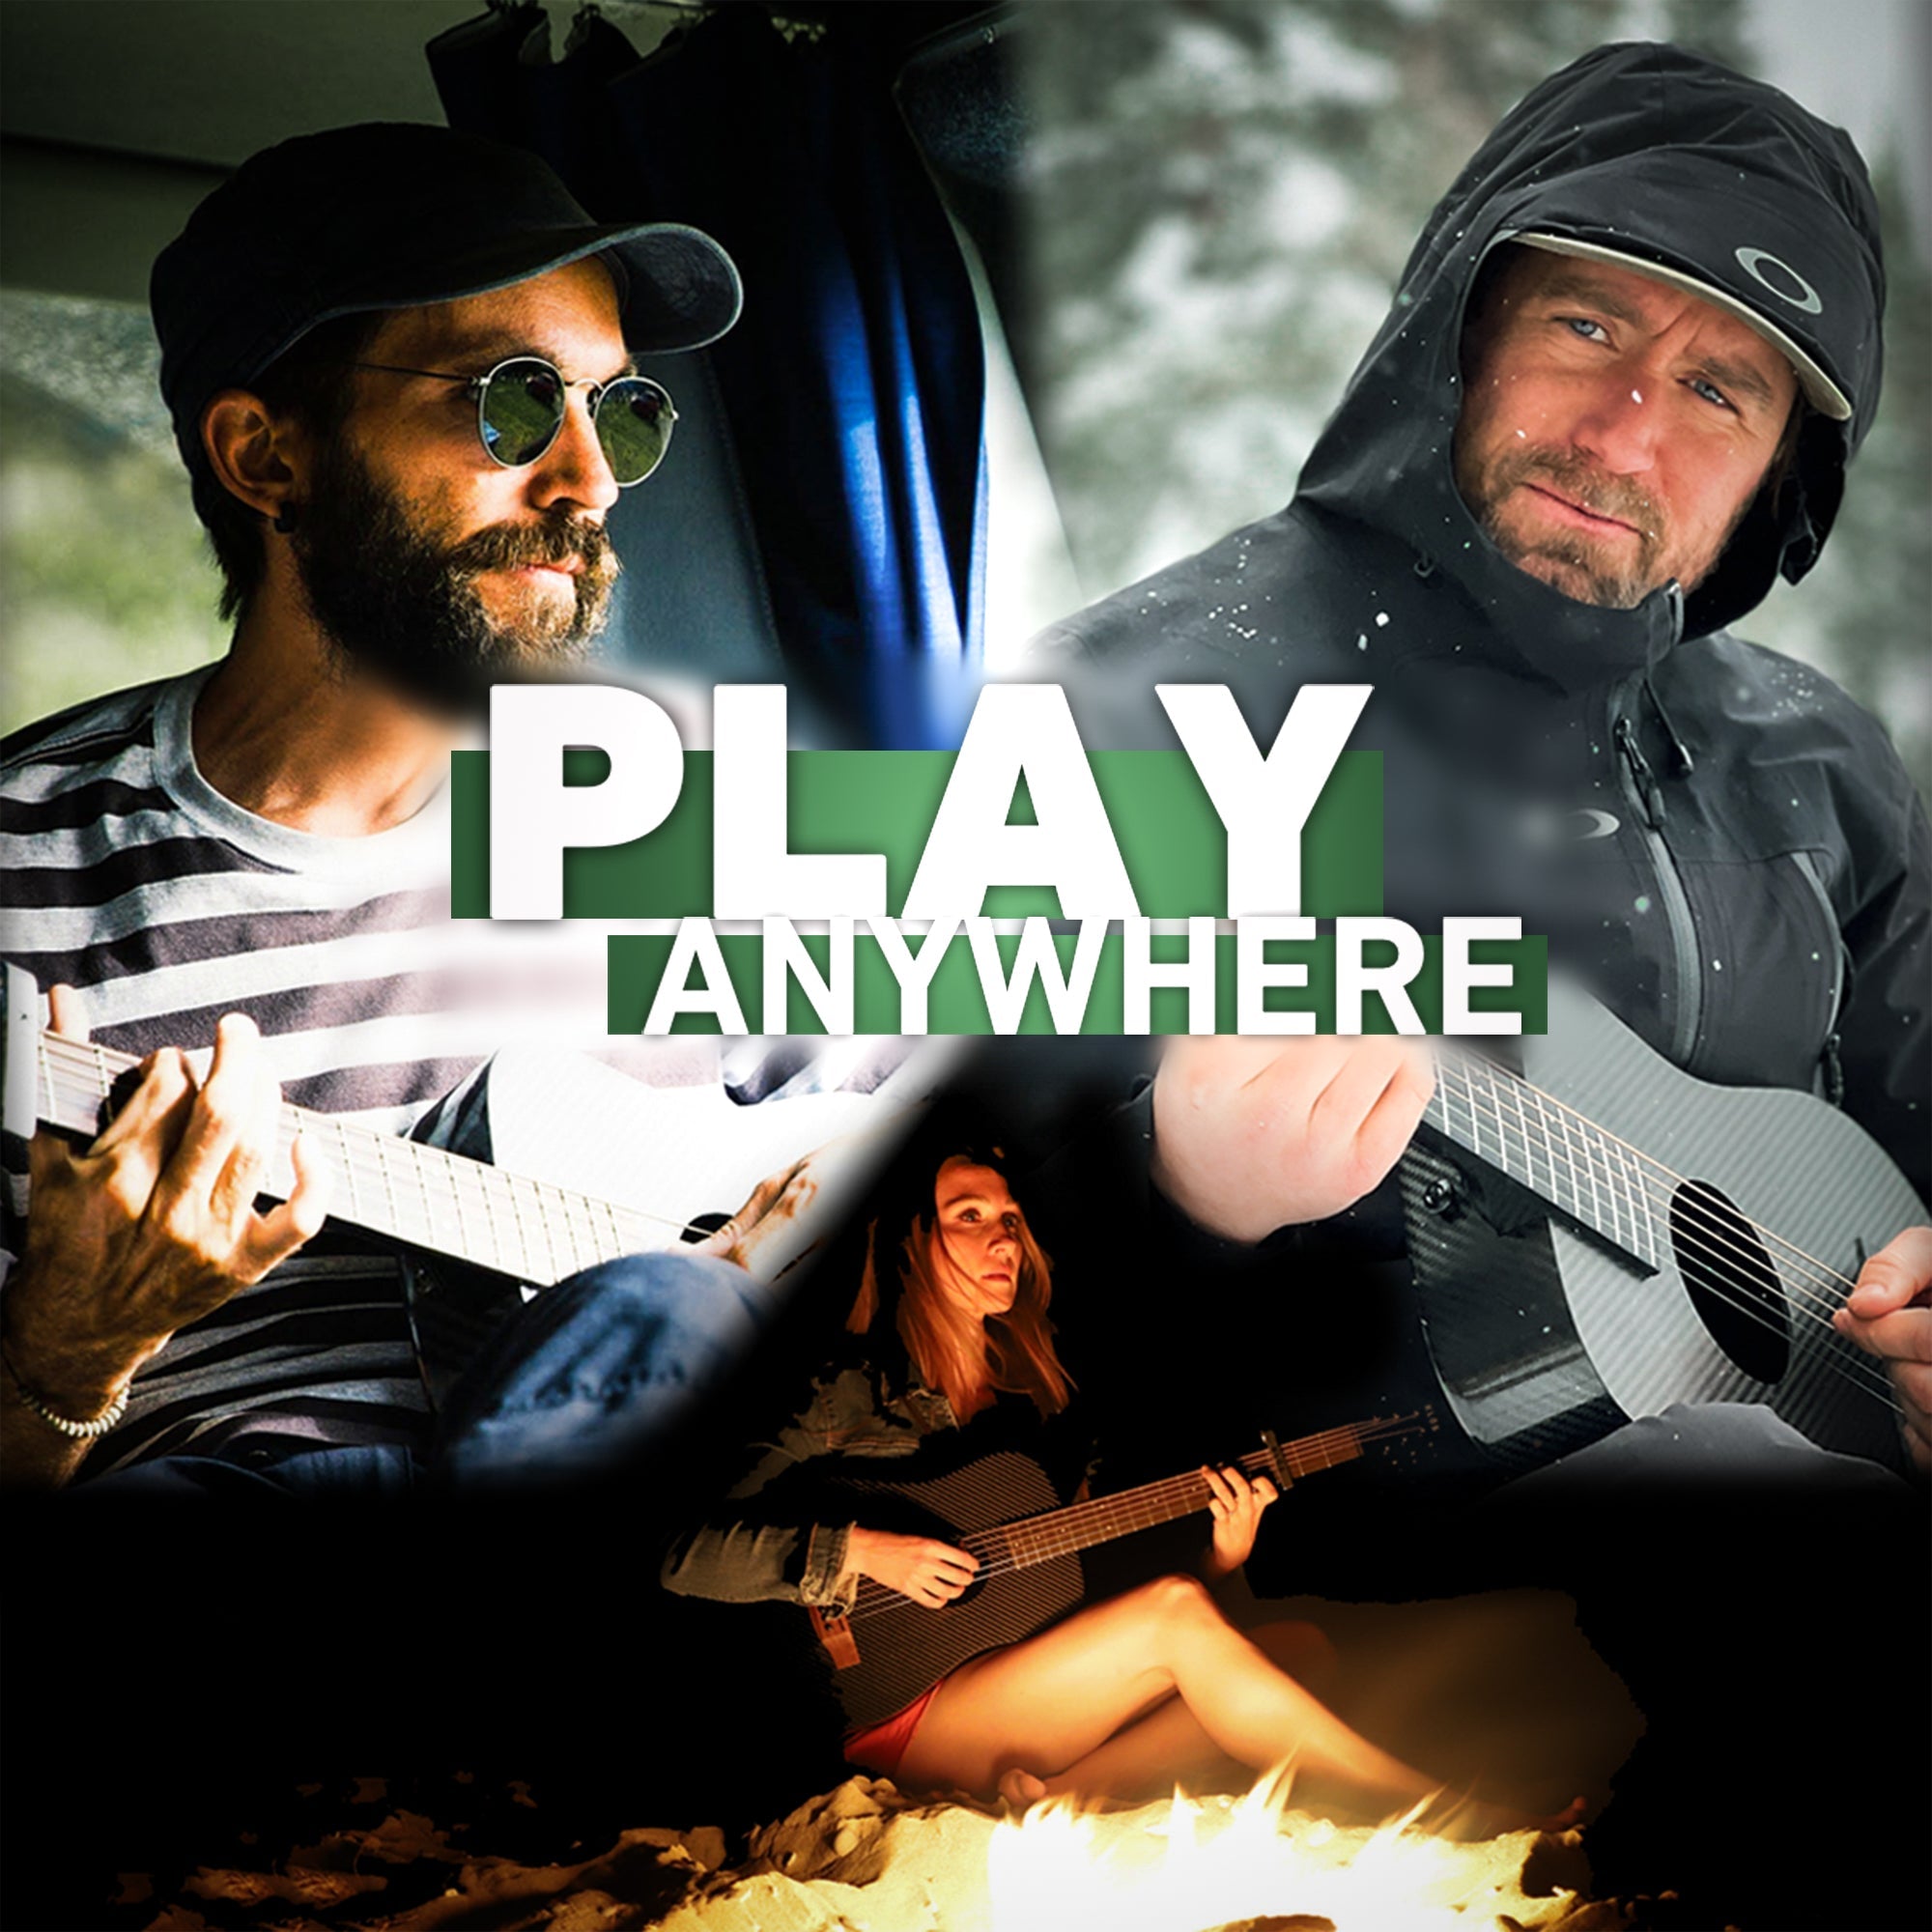 Play anywhere